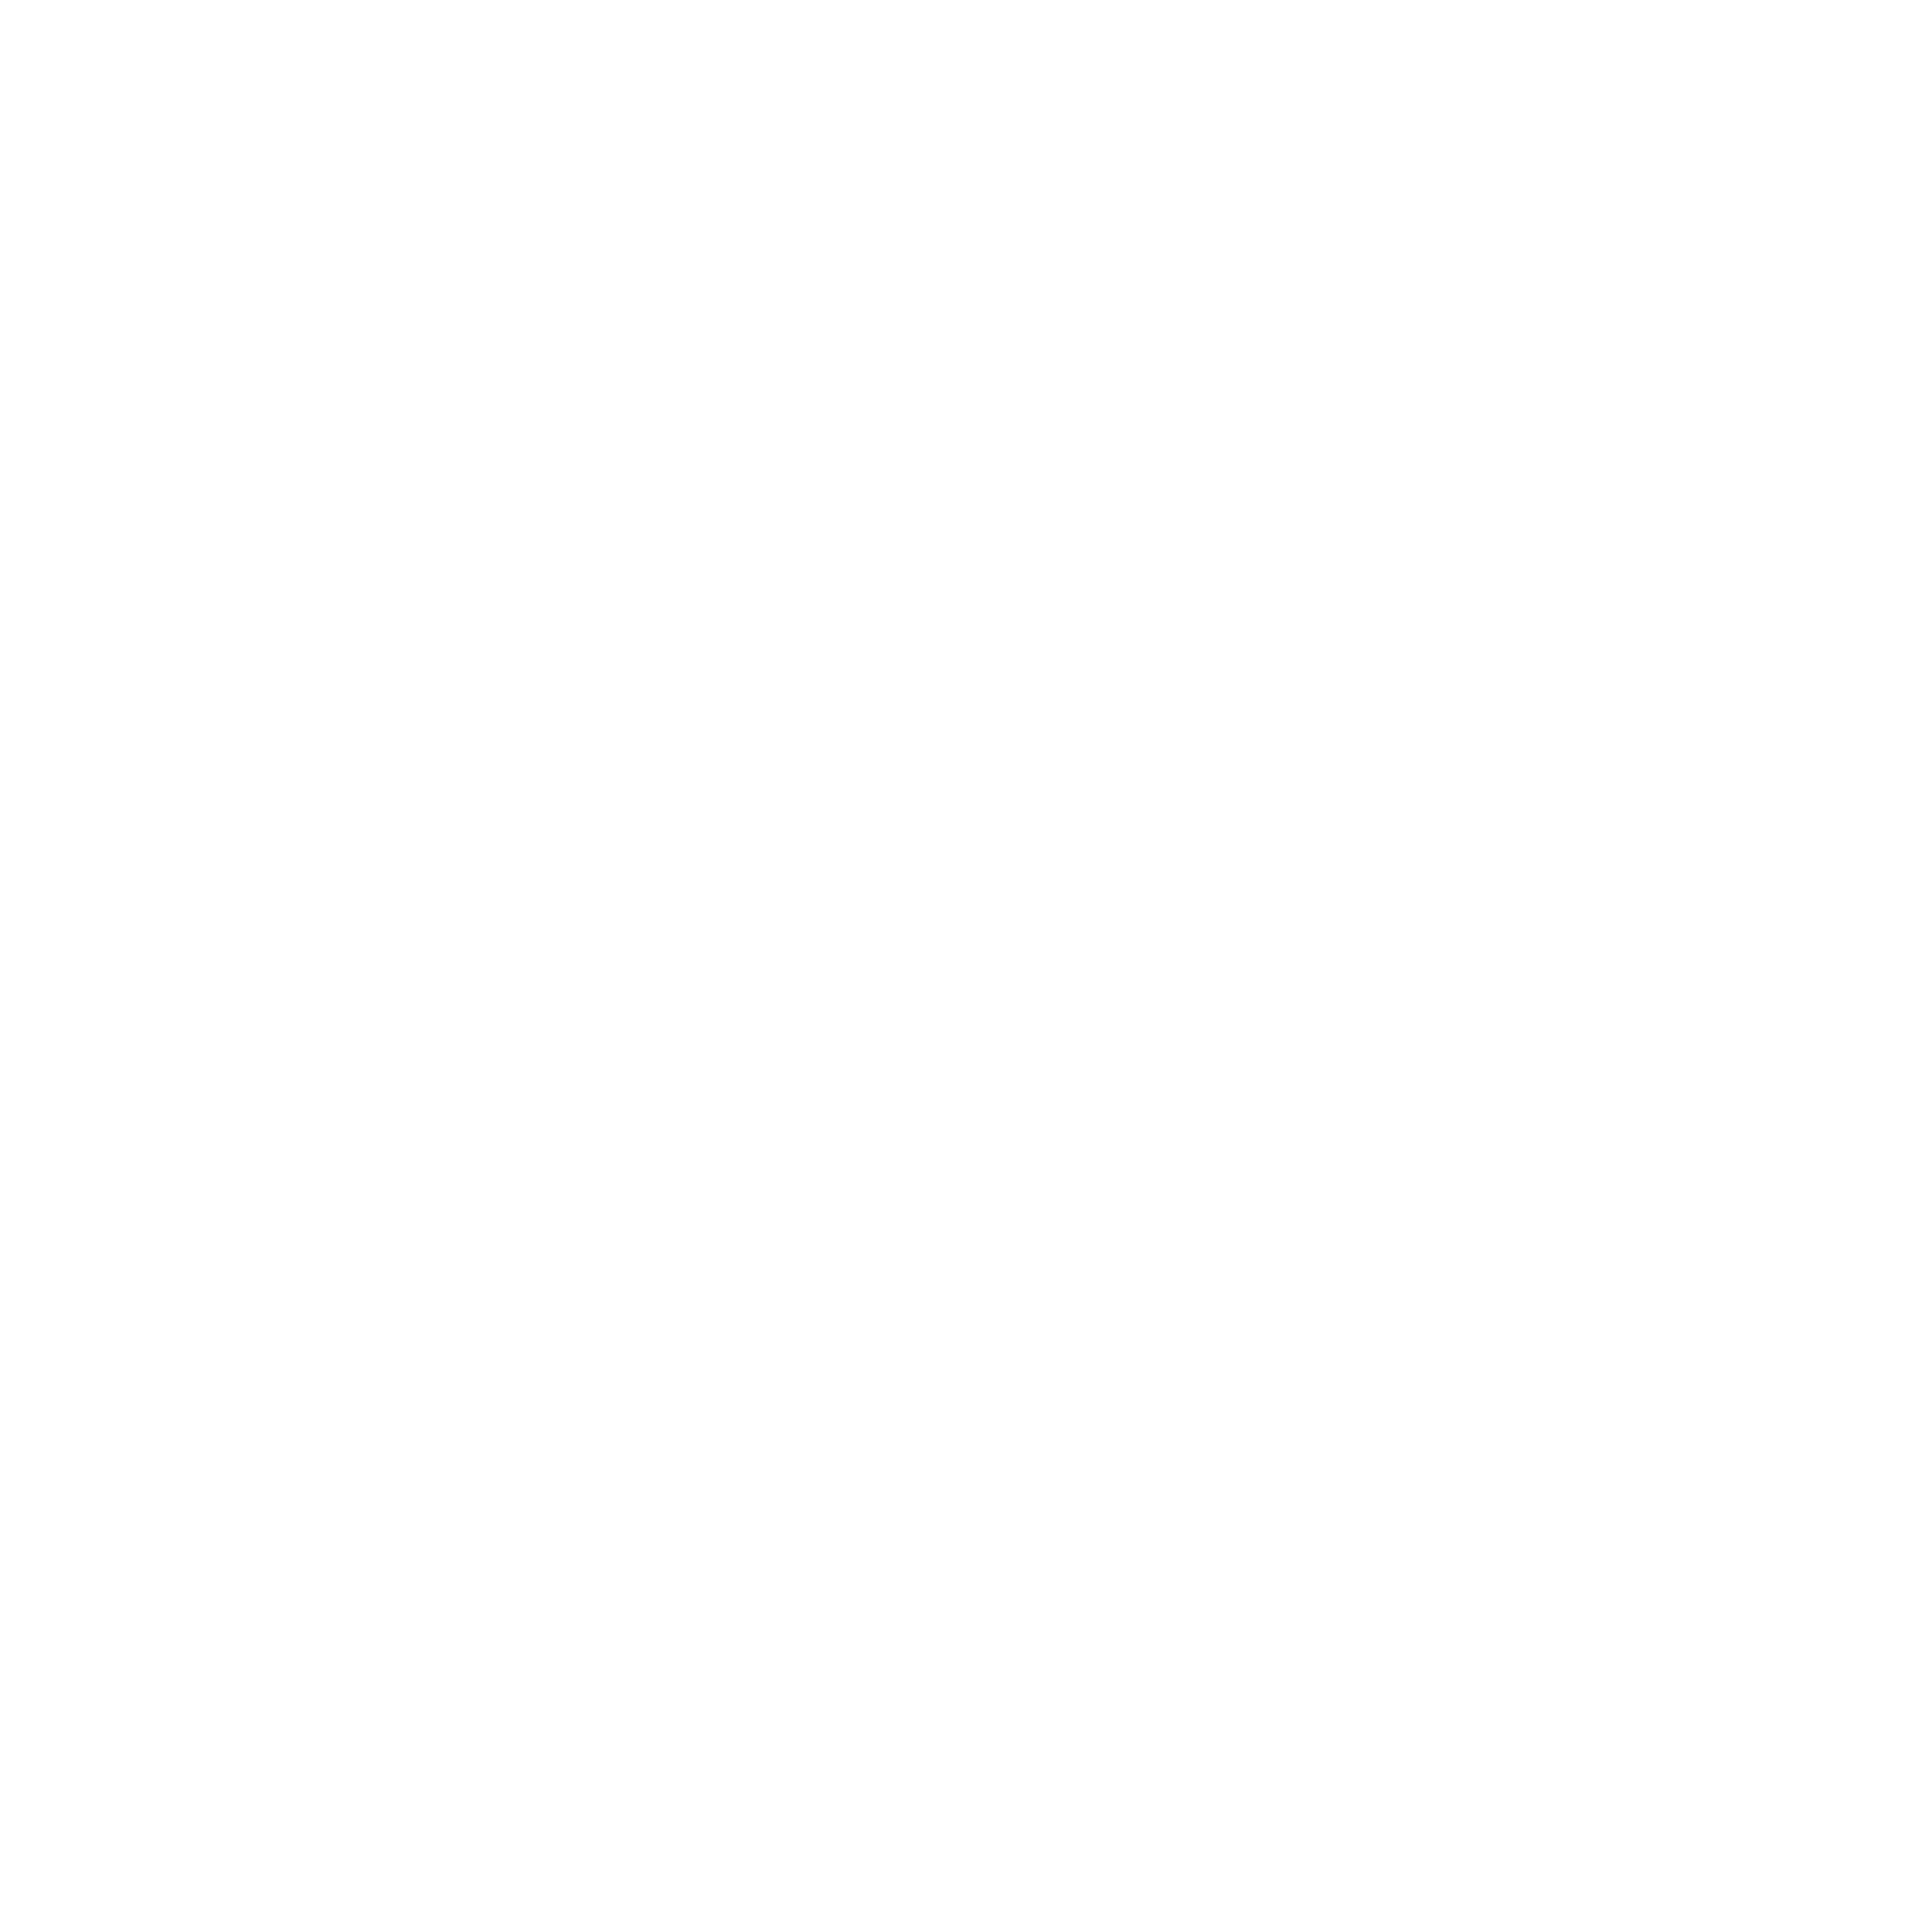 Gathering Springs Farm